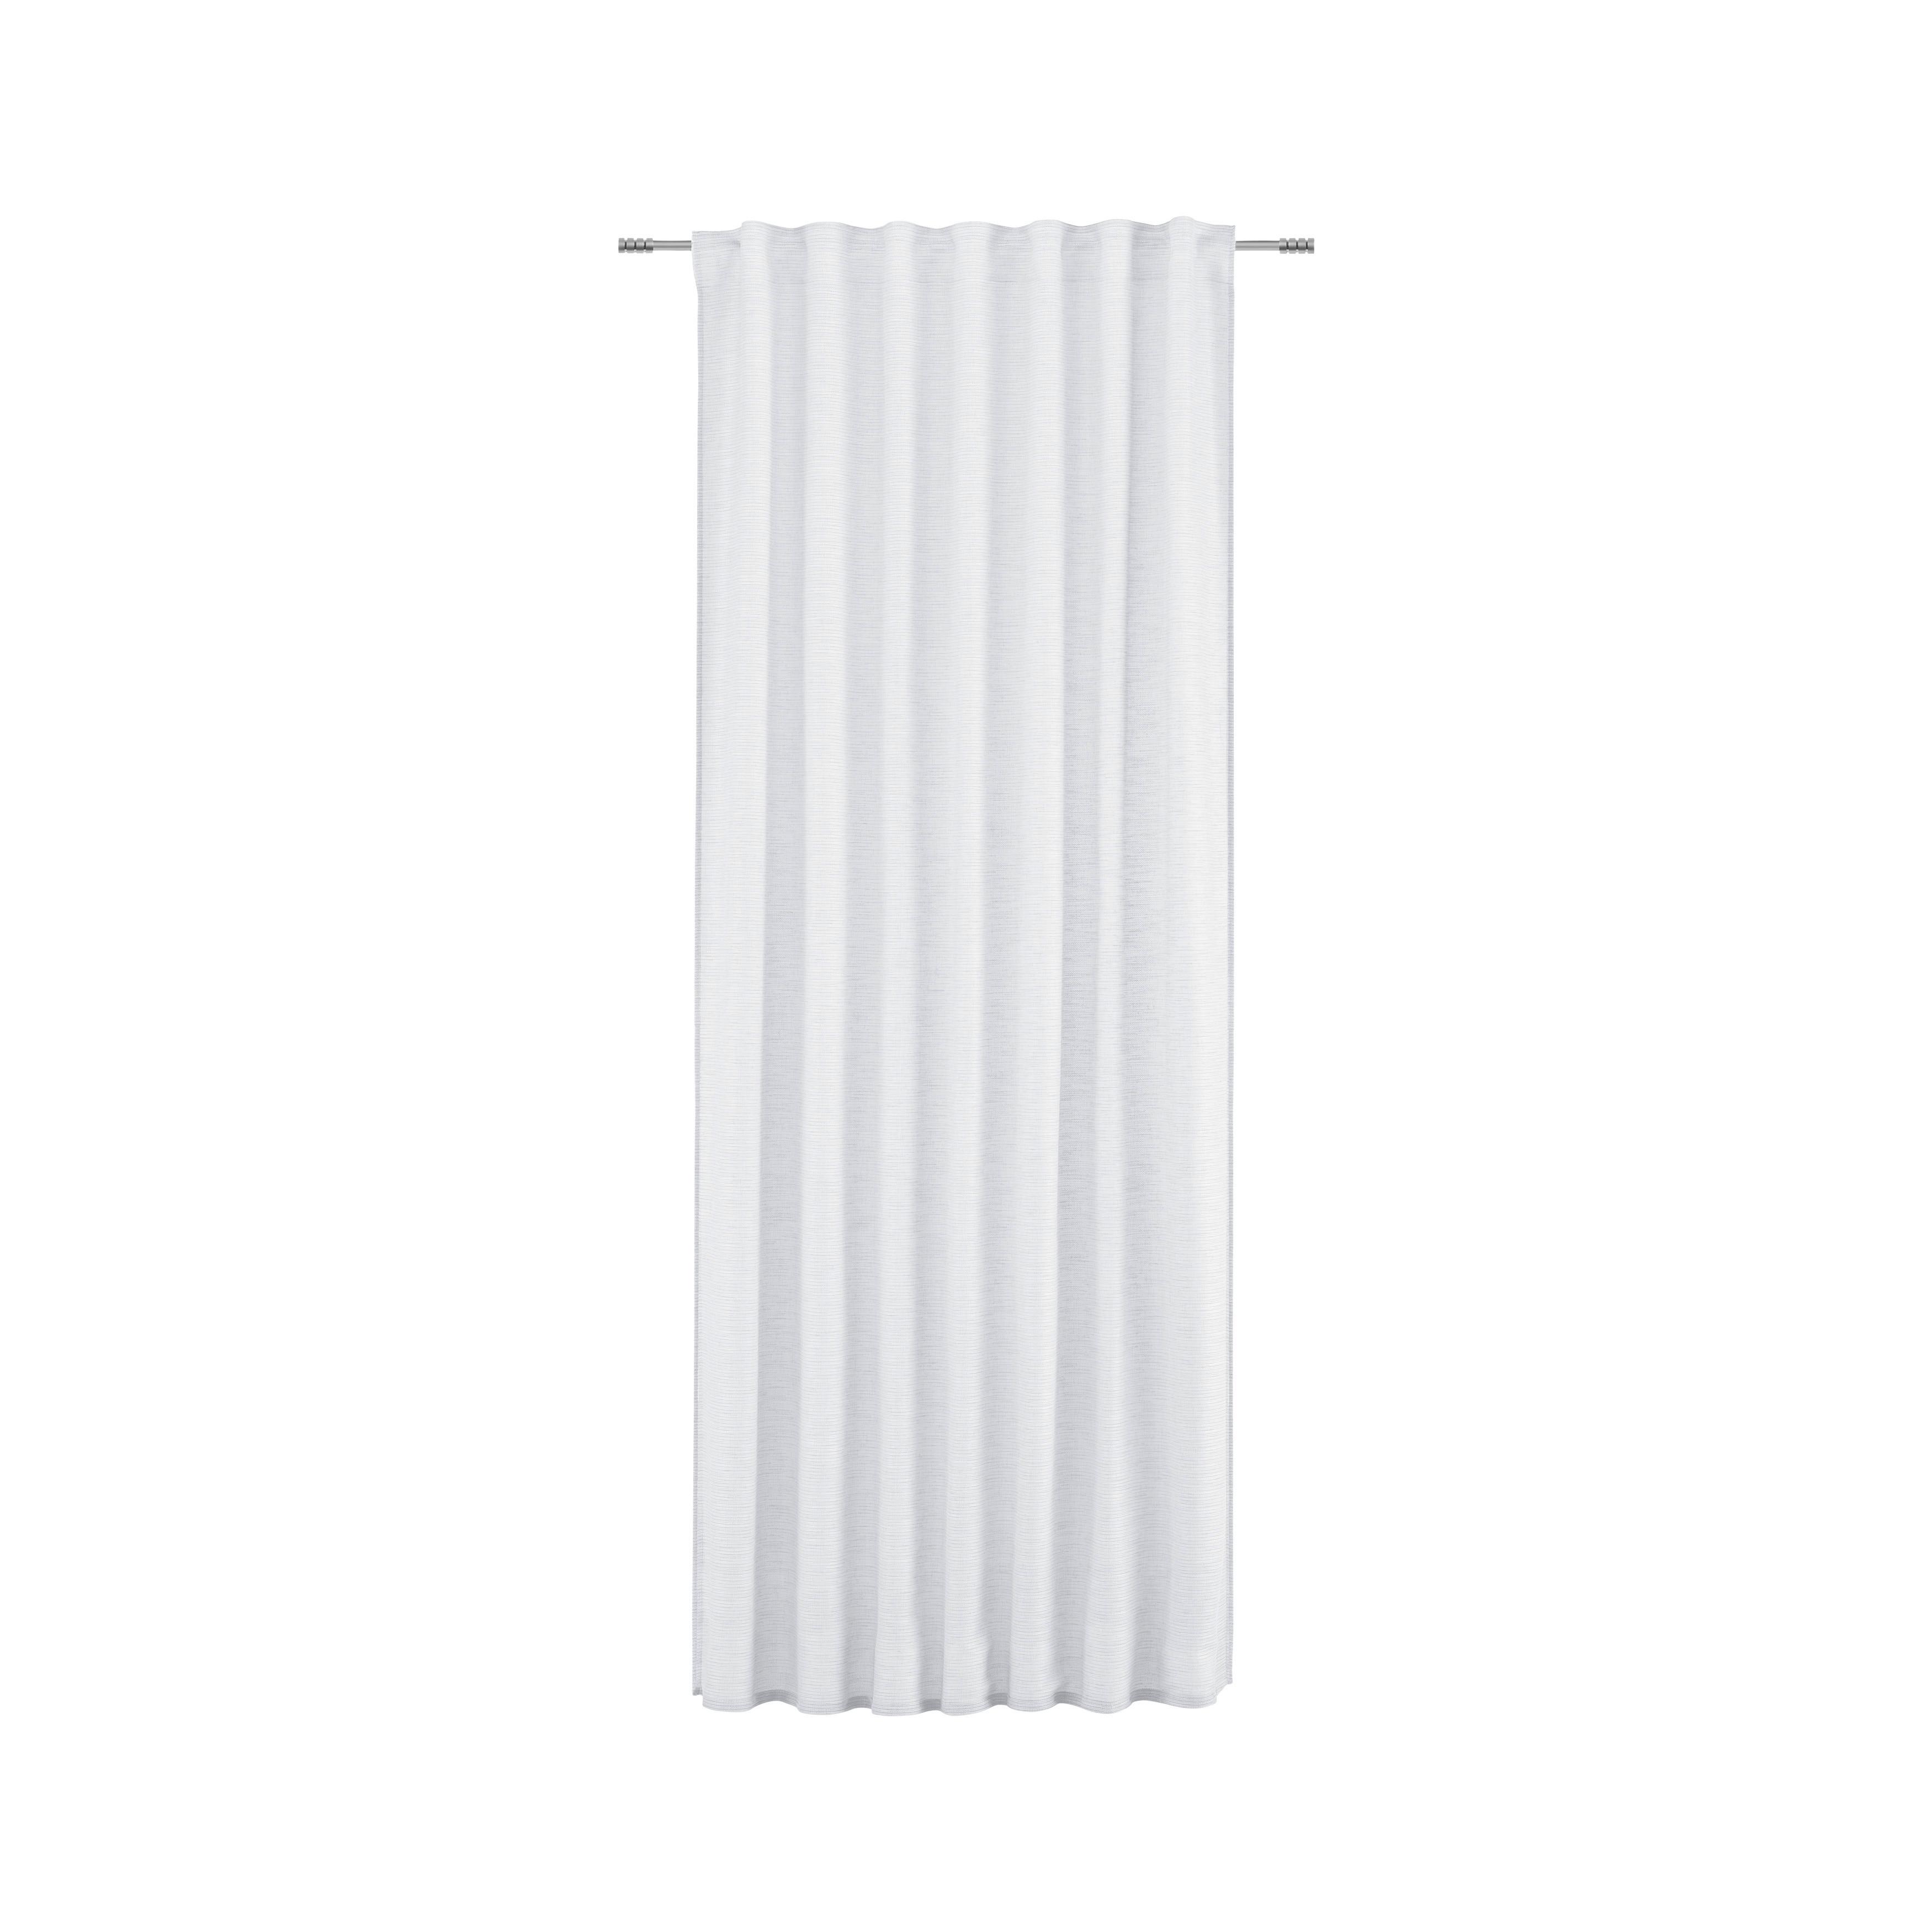 Fertigvorhang Eva in Weiß ca. 140x255cm - Weiß, ROMANTIK / LANDHAUS, Textil (140/255cm) - Premium Living